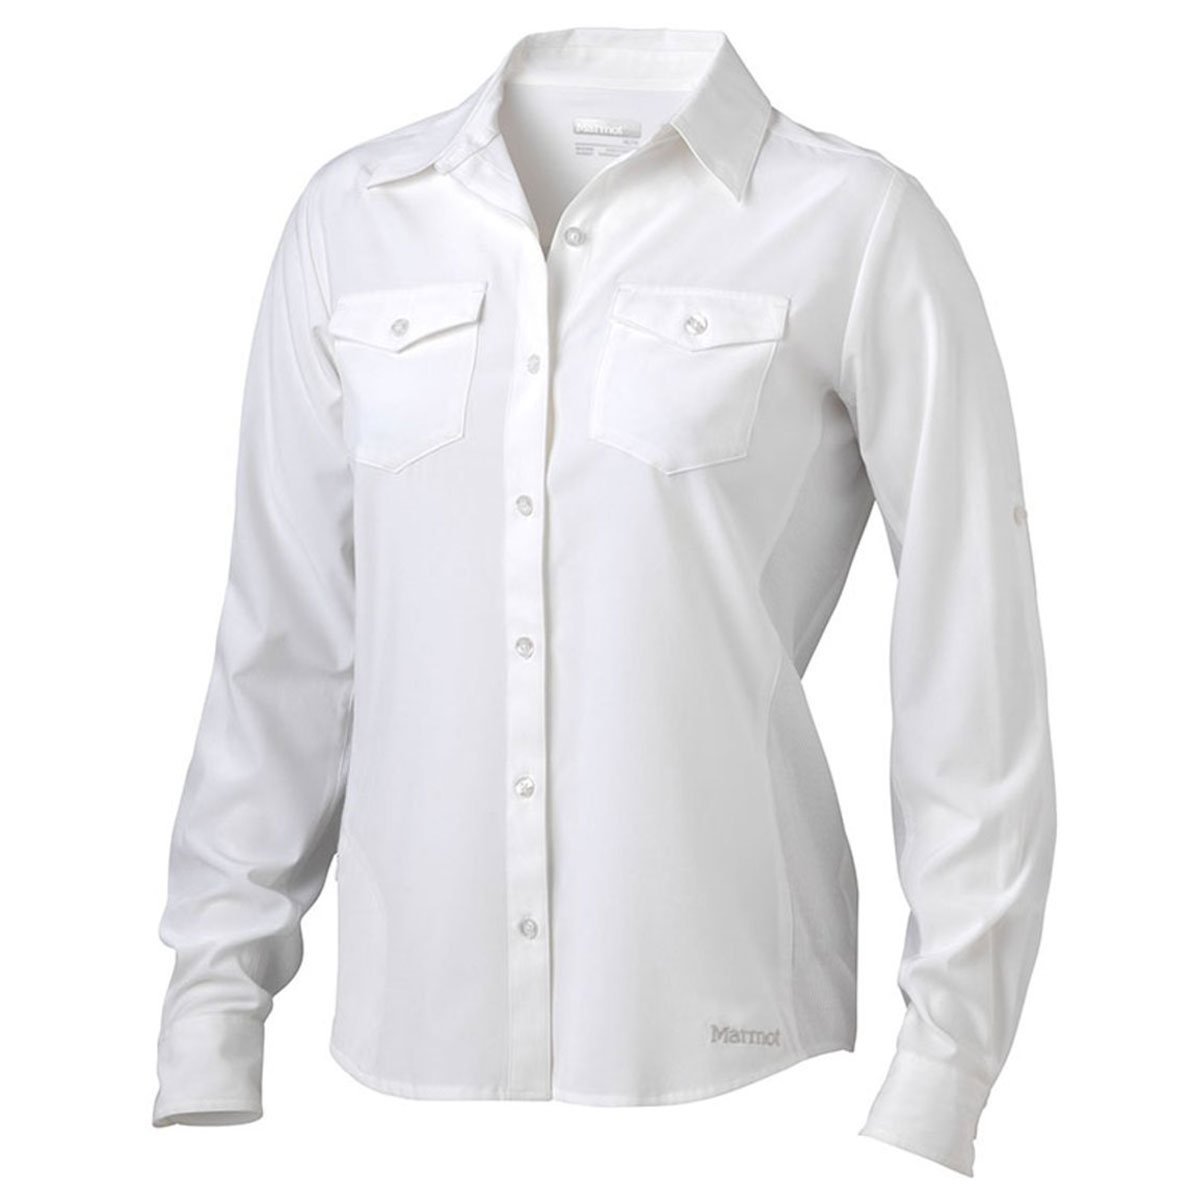 Marmot Women's Annika Long-Sleeve Shirt - White, XL